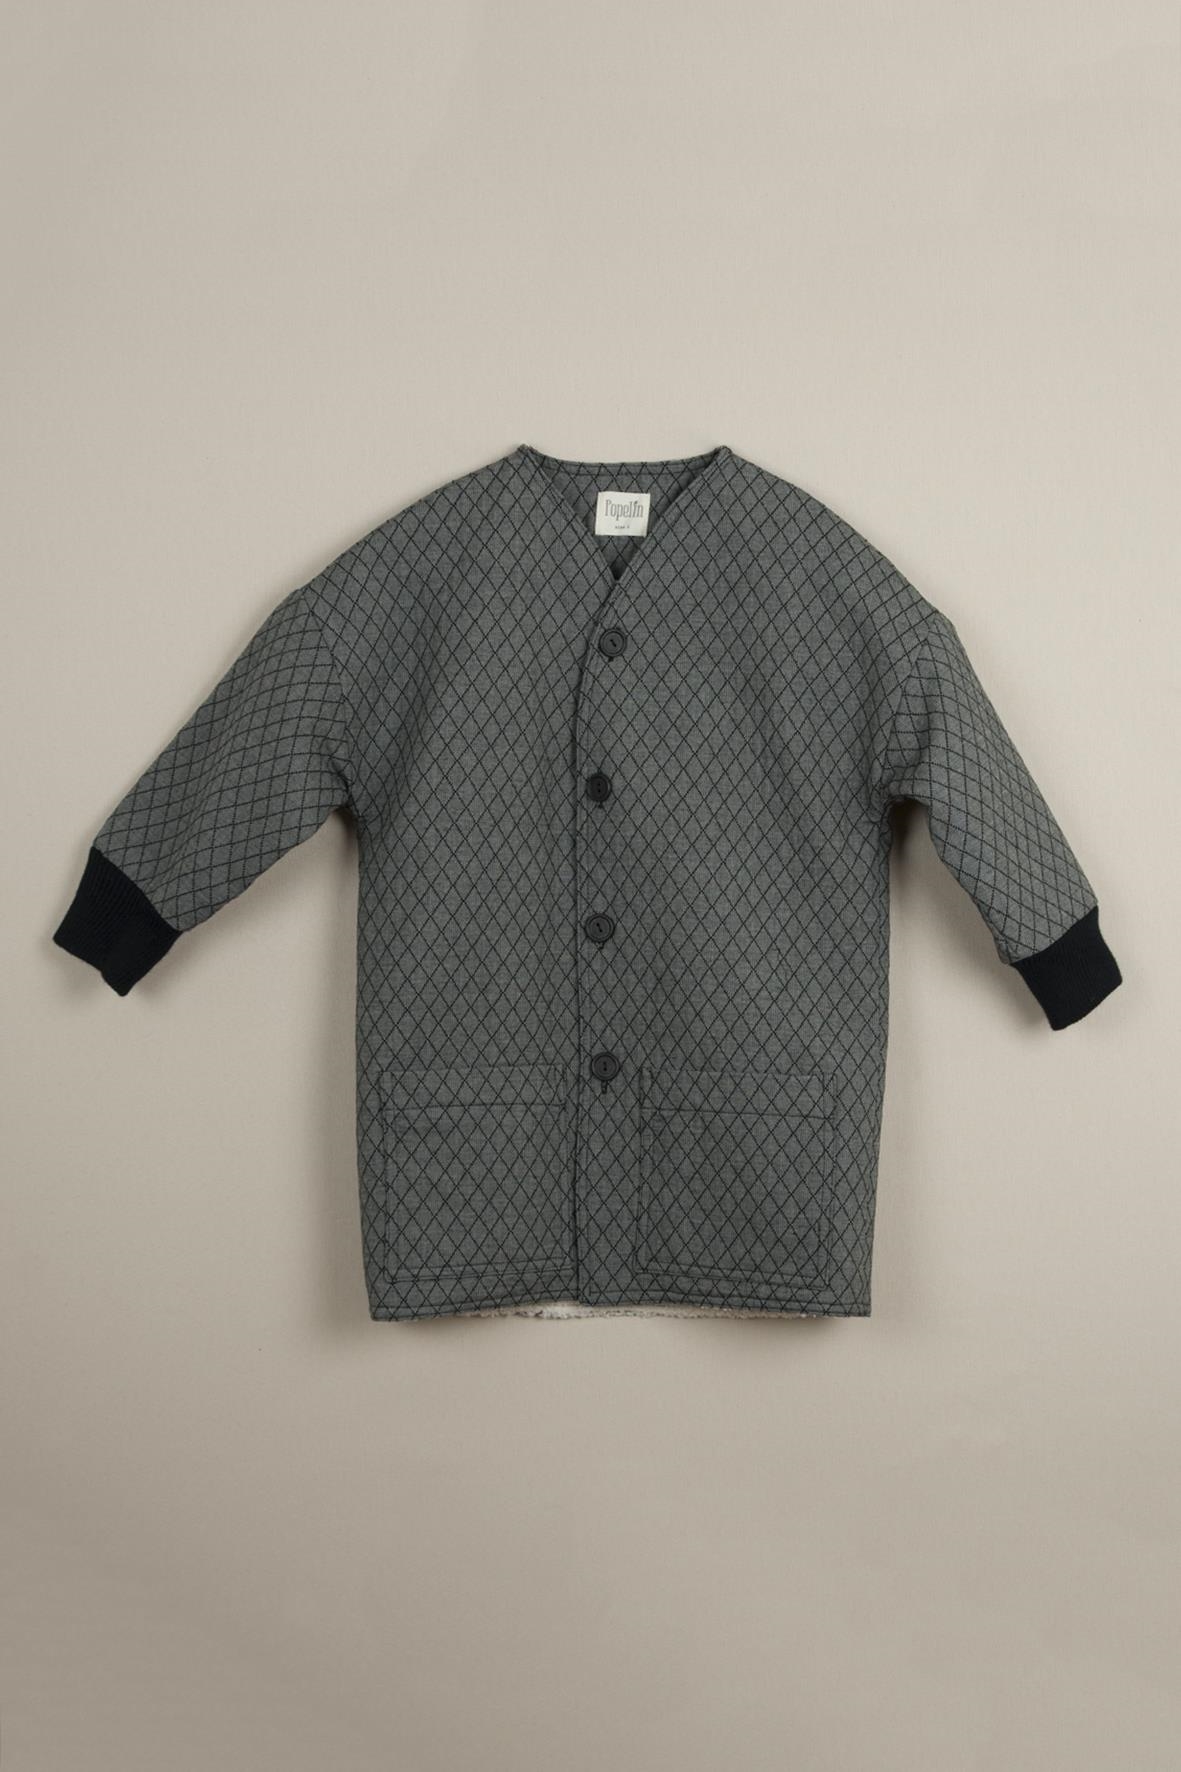 Mod.30.4 Diamont pattern coat | AW19.20 Mod.30.4 Diamont pattern coat